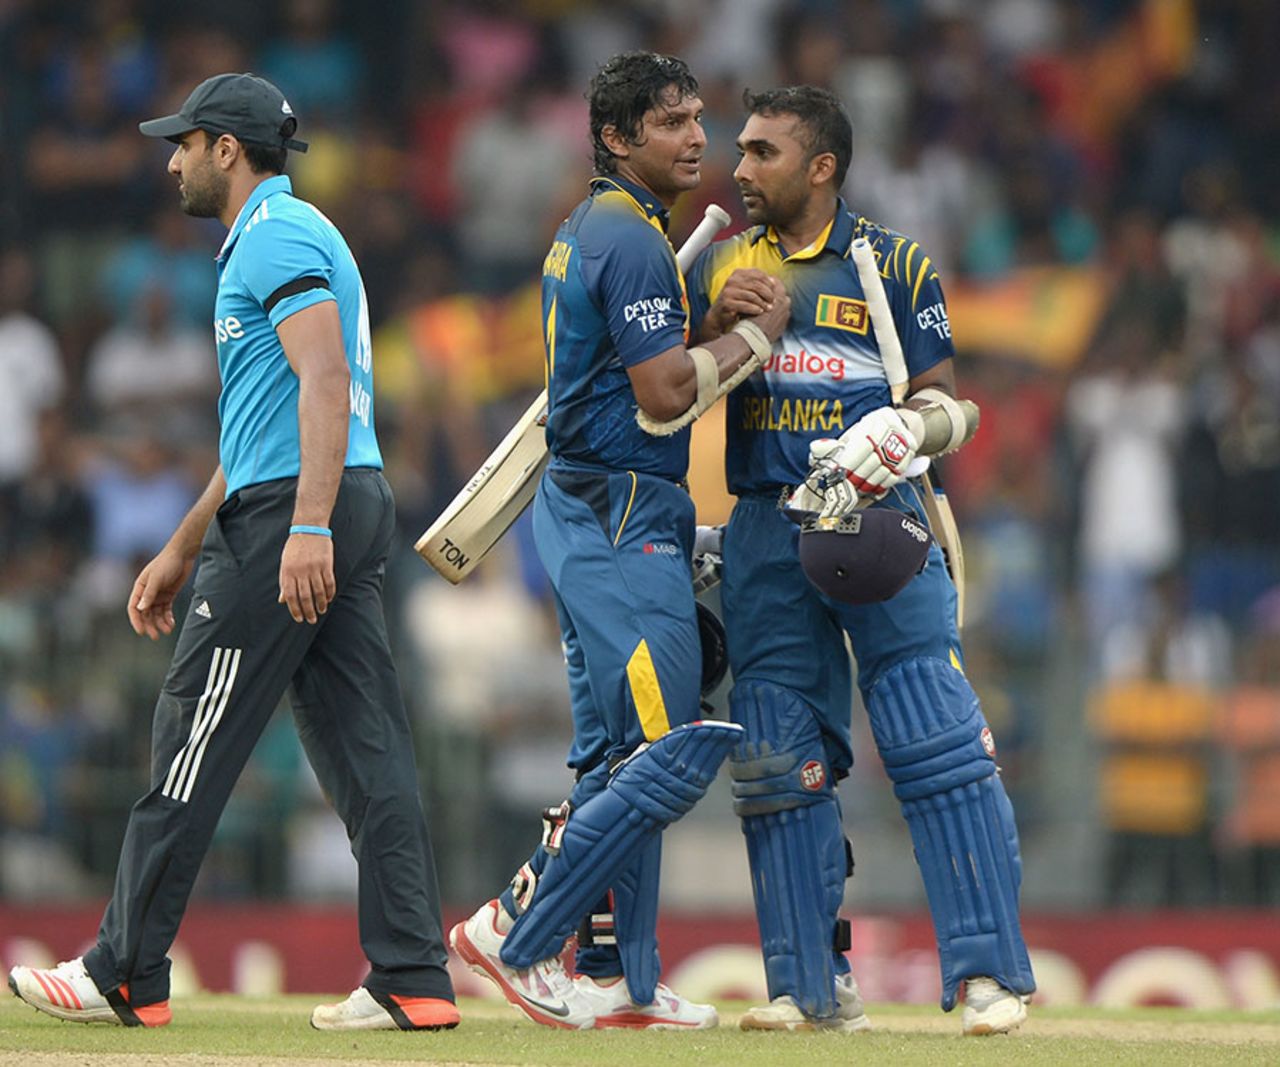 Kumar Sangakkara and Mahela Jayawardene shared their 15th century stand in ODIs, Sri Lanka v England, 2nd ODI, Colombo, November 29, 2014